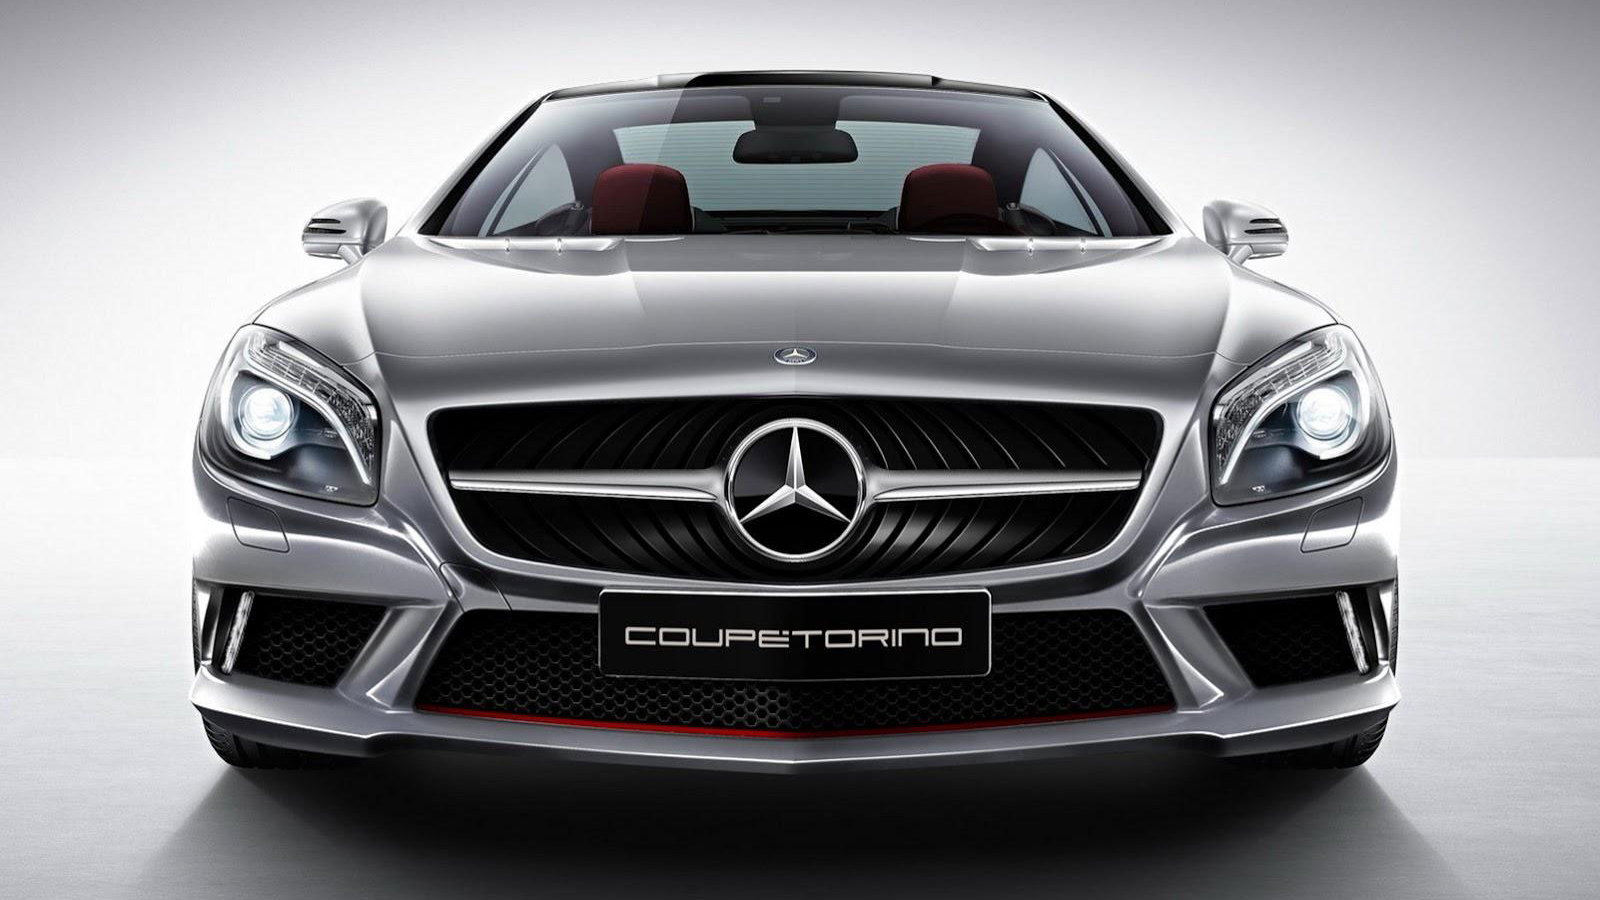 Mercedes-Benz SL Class-based CoupeTorino design study by StudioTorino